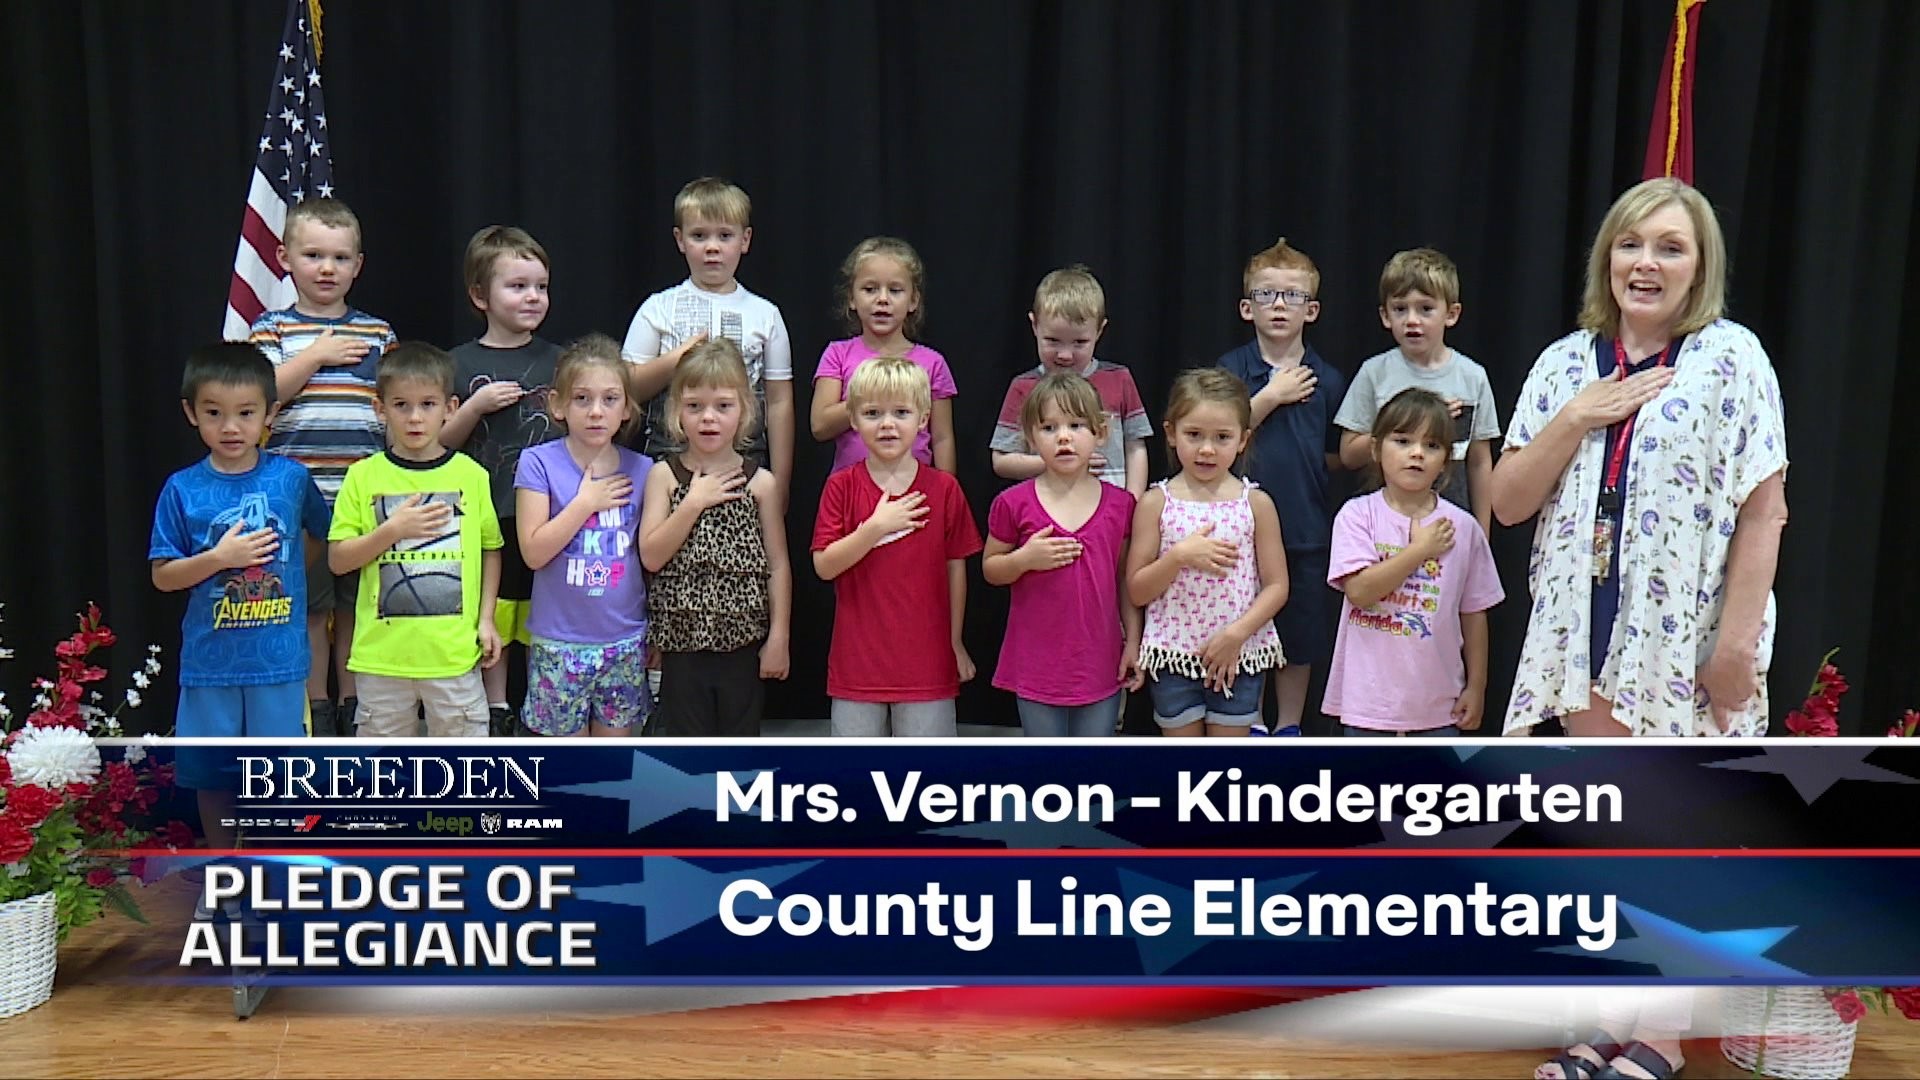 Mrs. Vernon, Kindergarten County Line Elementary